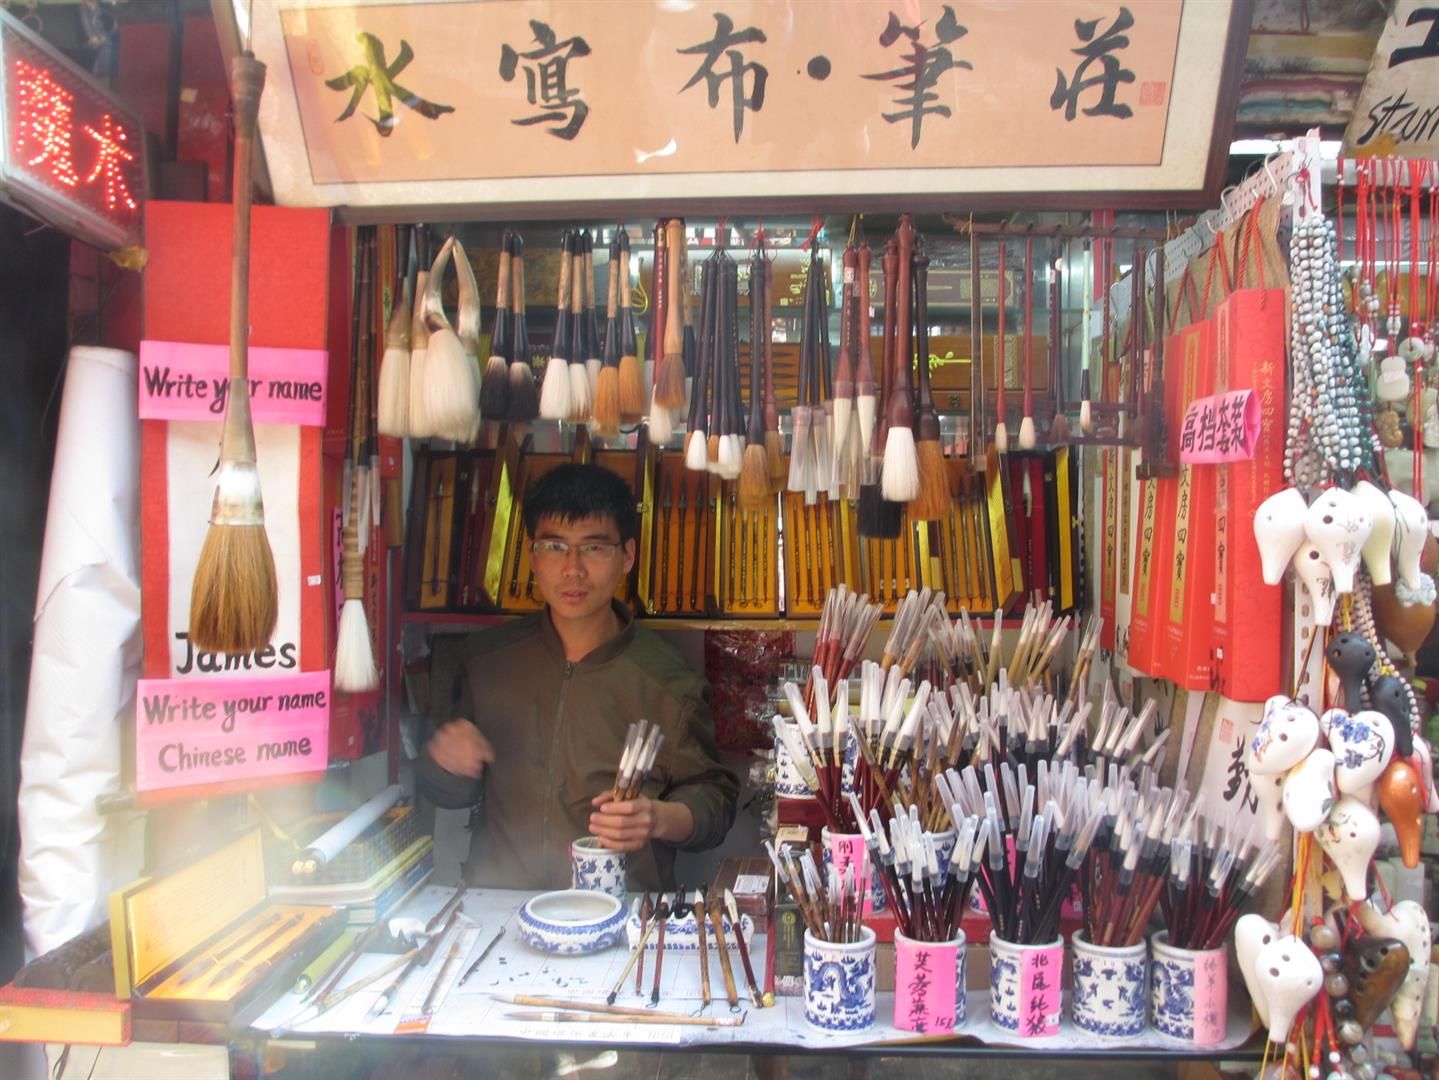  photo Chinese-market-Beijing-brushes_zpstlavjcmg.jpg